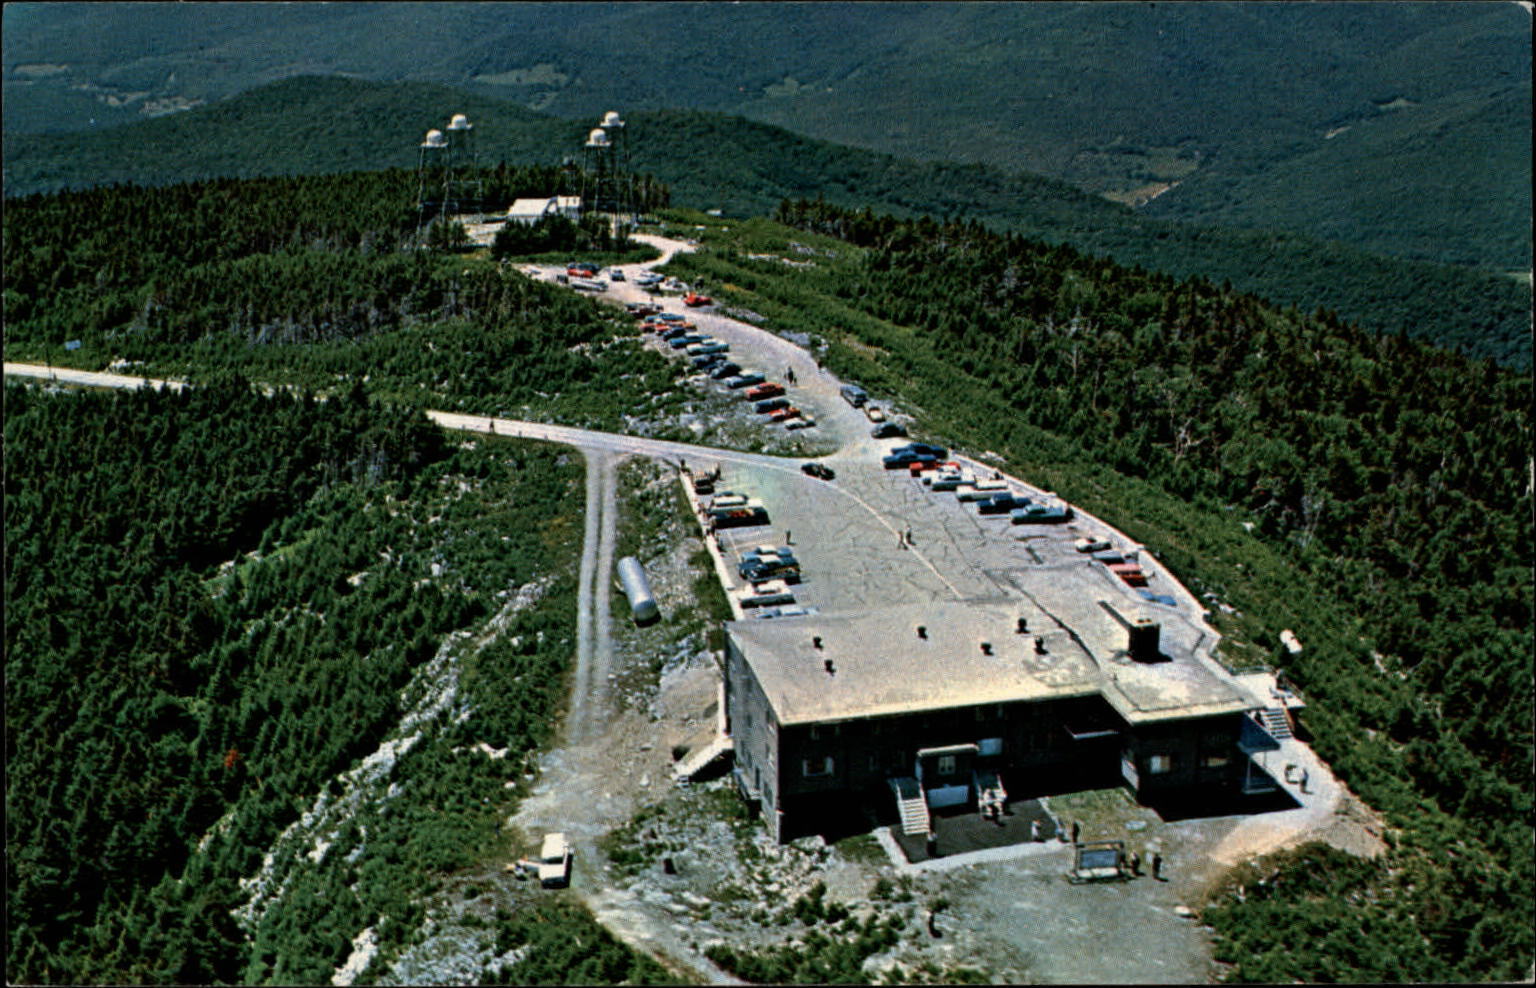 Mt Equinox Sky Line Inn Manchester Vermont aerial view ~ 1984 postcard